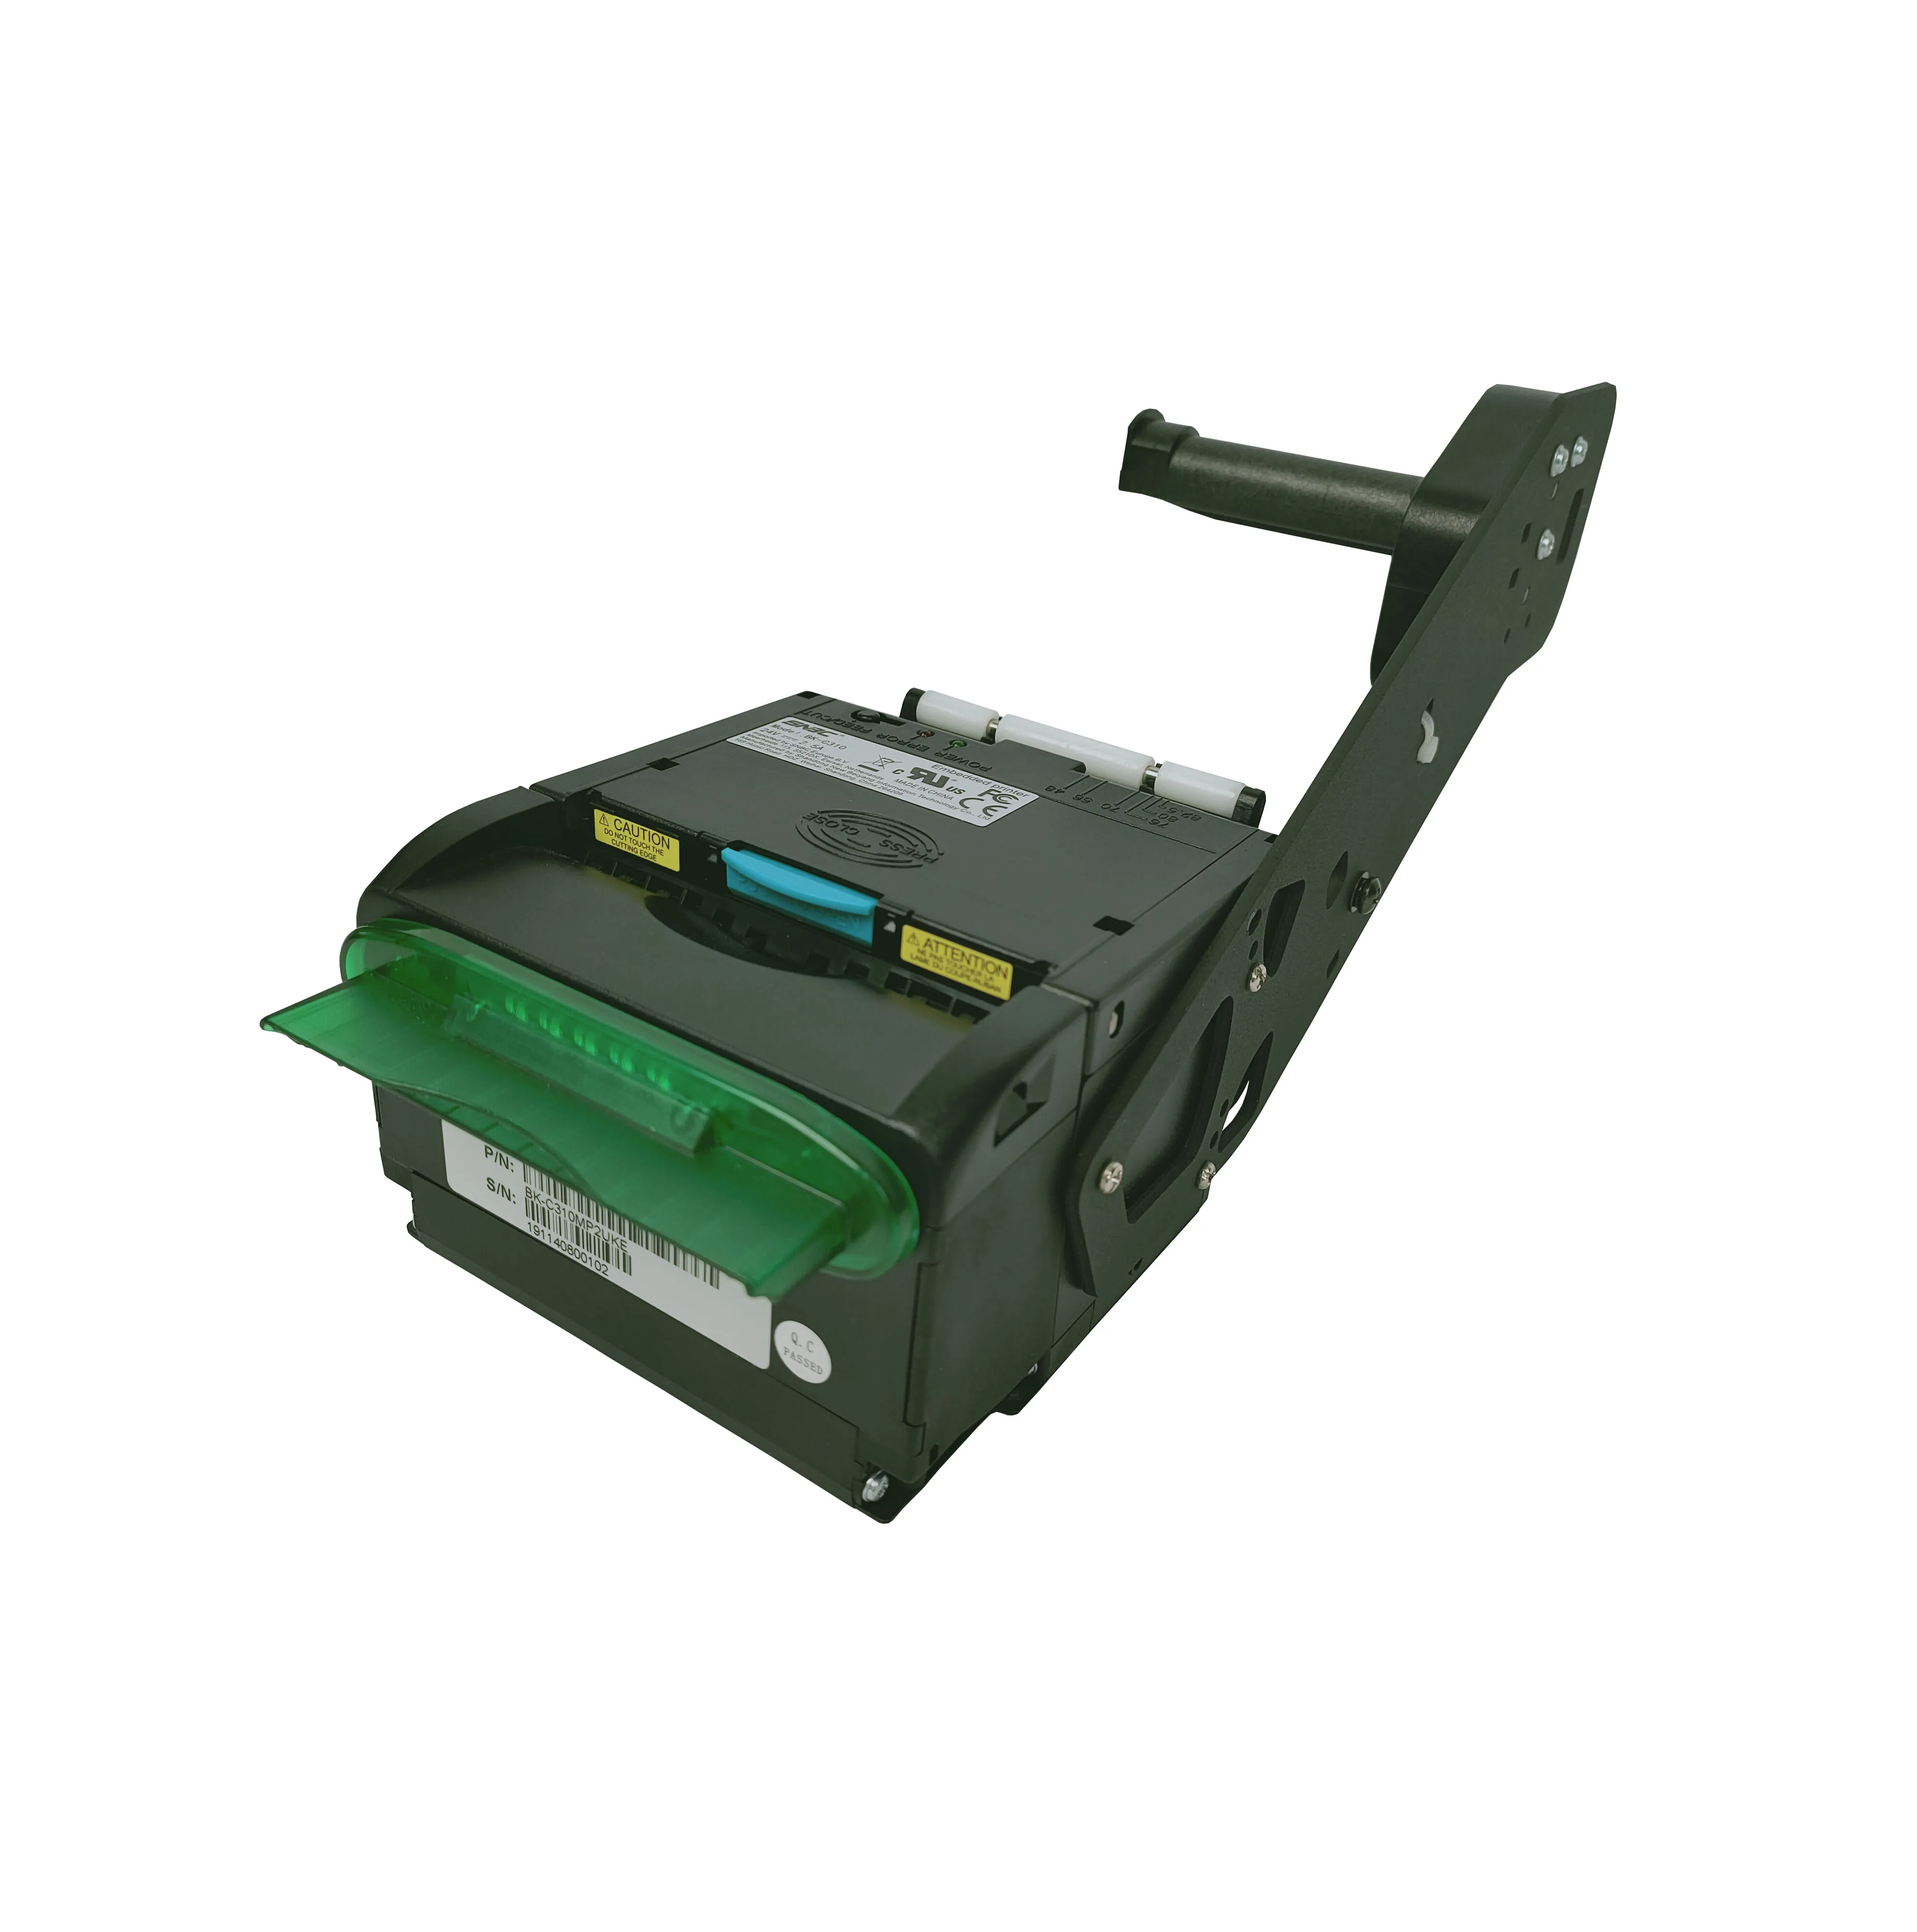 

SNBC KT800 80mm USB Serial Port KIOSK Thermal Printer Auto Cutter ATM Machine Queuing Machine Printer